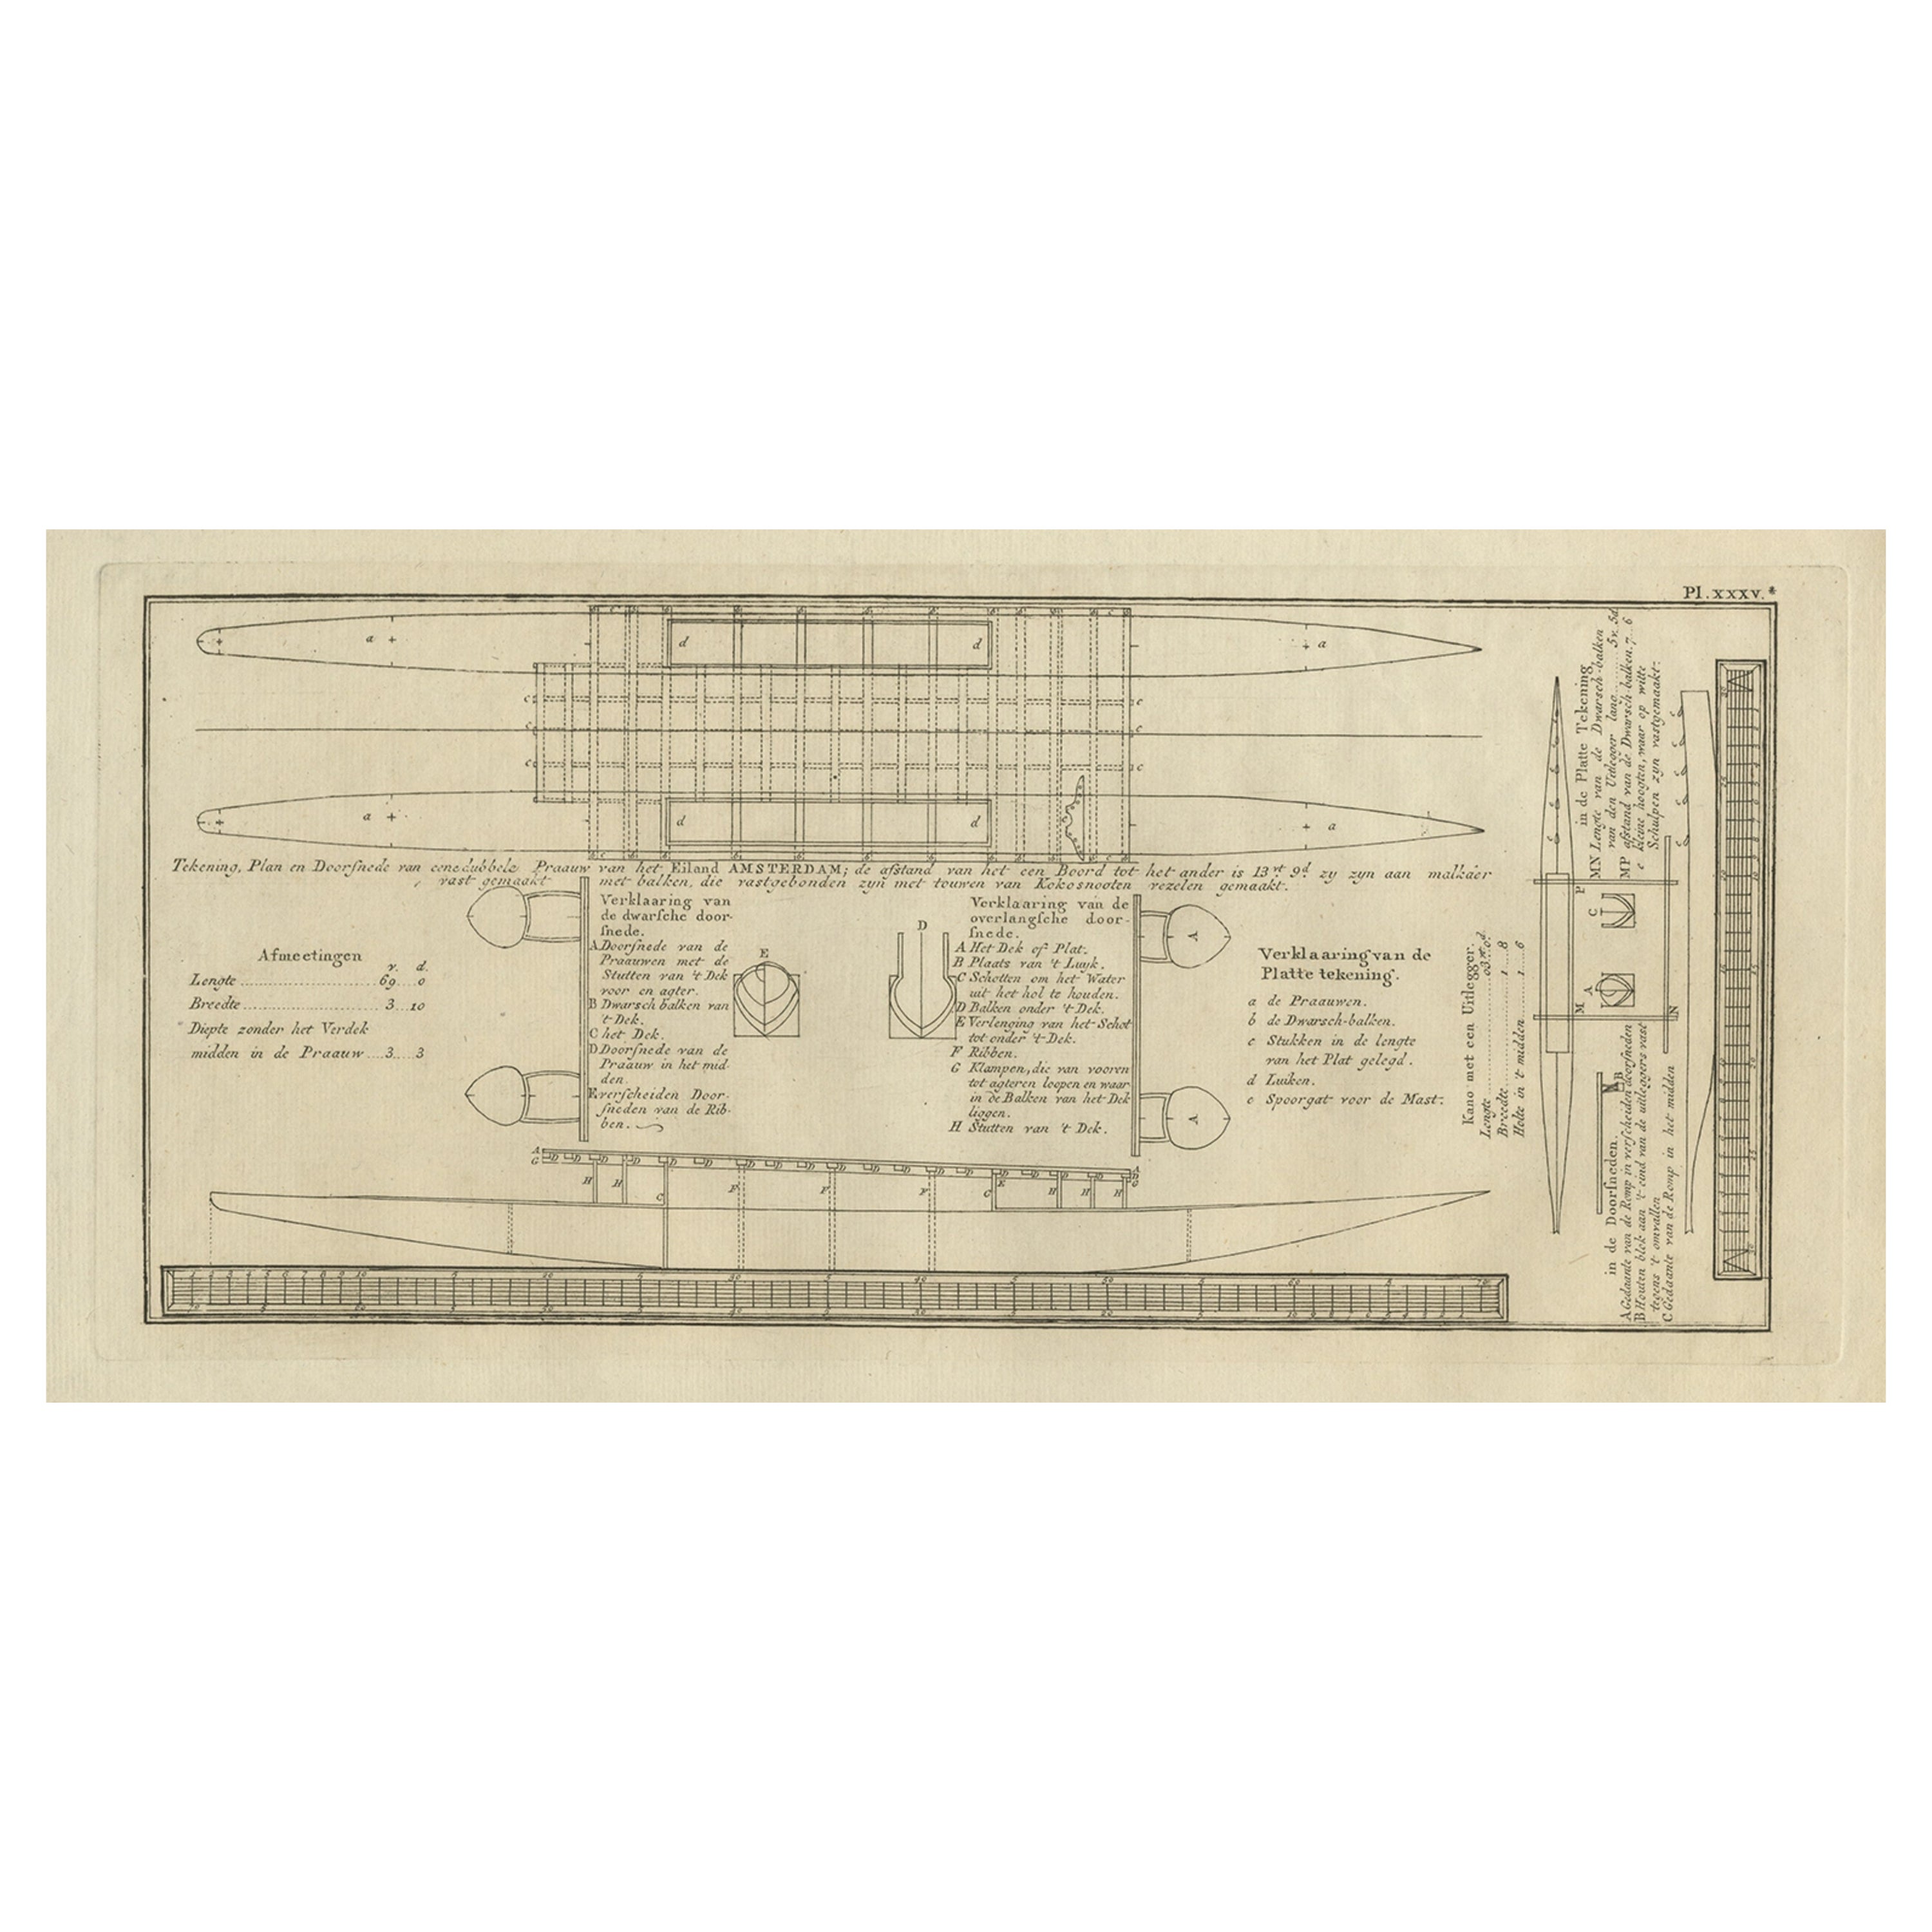 Old Drawing or Plan of a Proa of Amsterdam Island, Now Tongatapu, Tonga, 1803